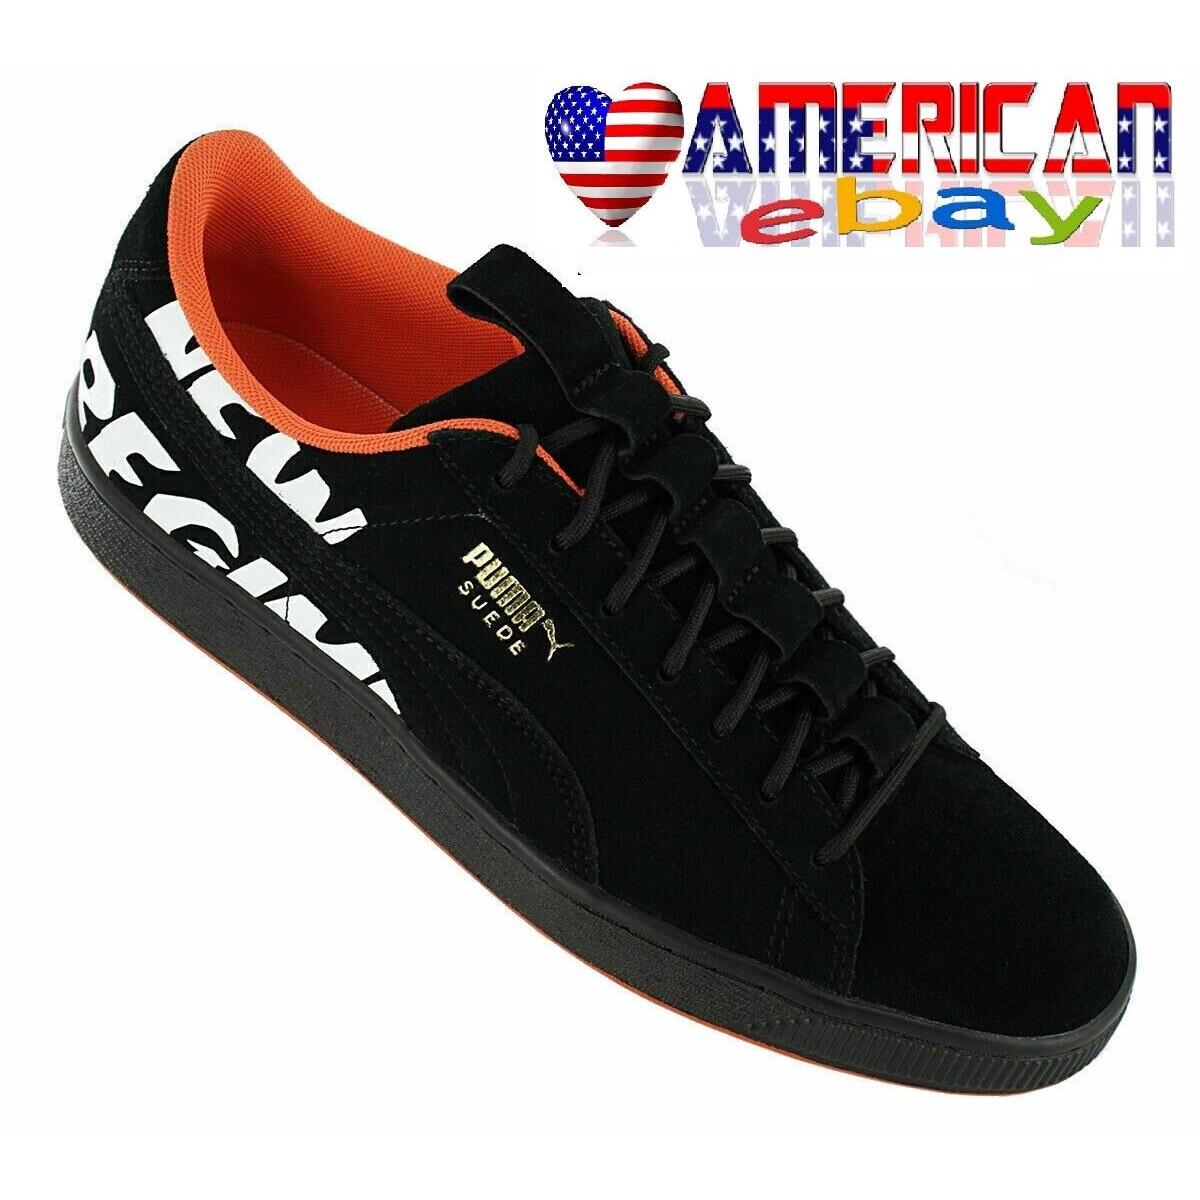 Puma x Atelier Regime Suede 366534-02 Men s Shoes Trainers Sneakers